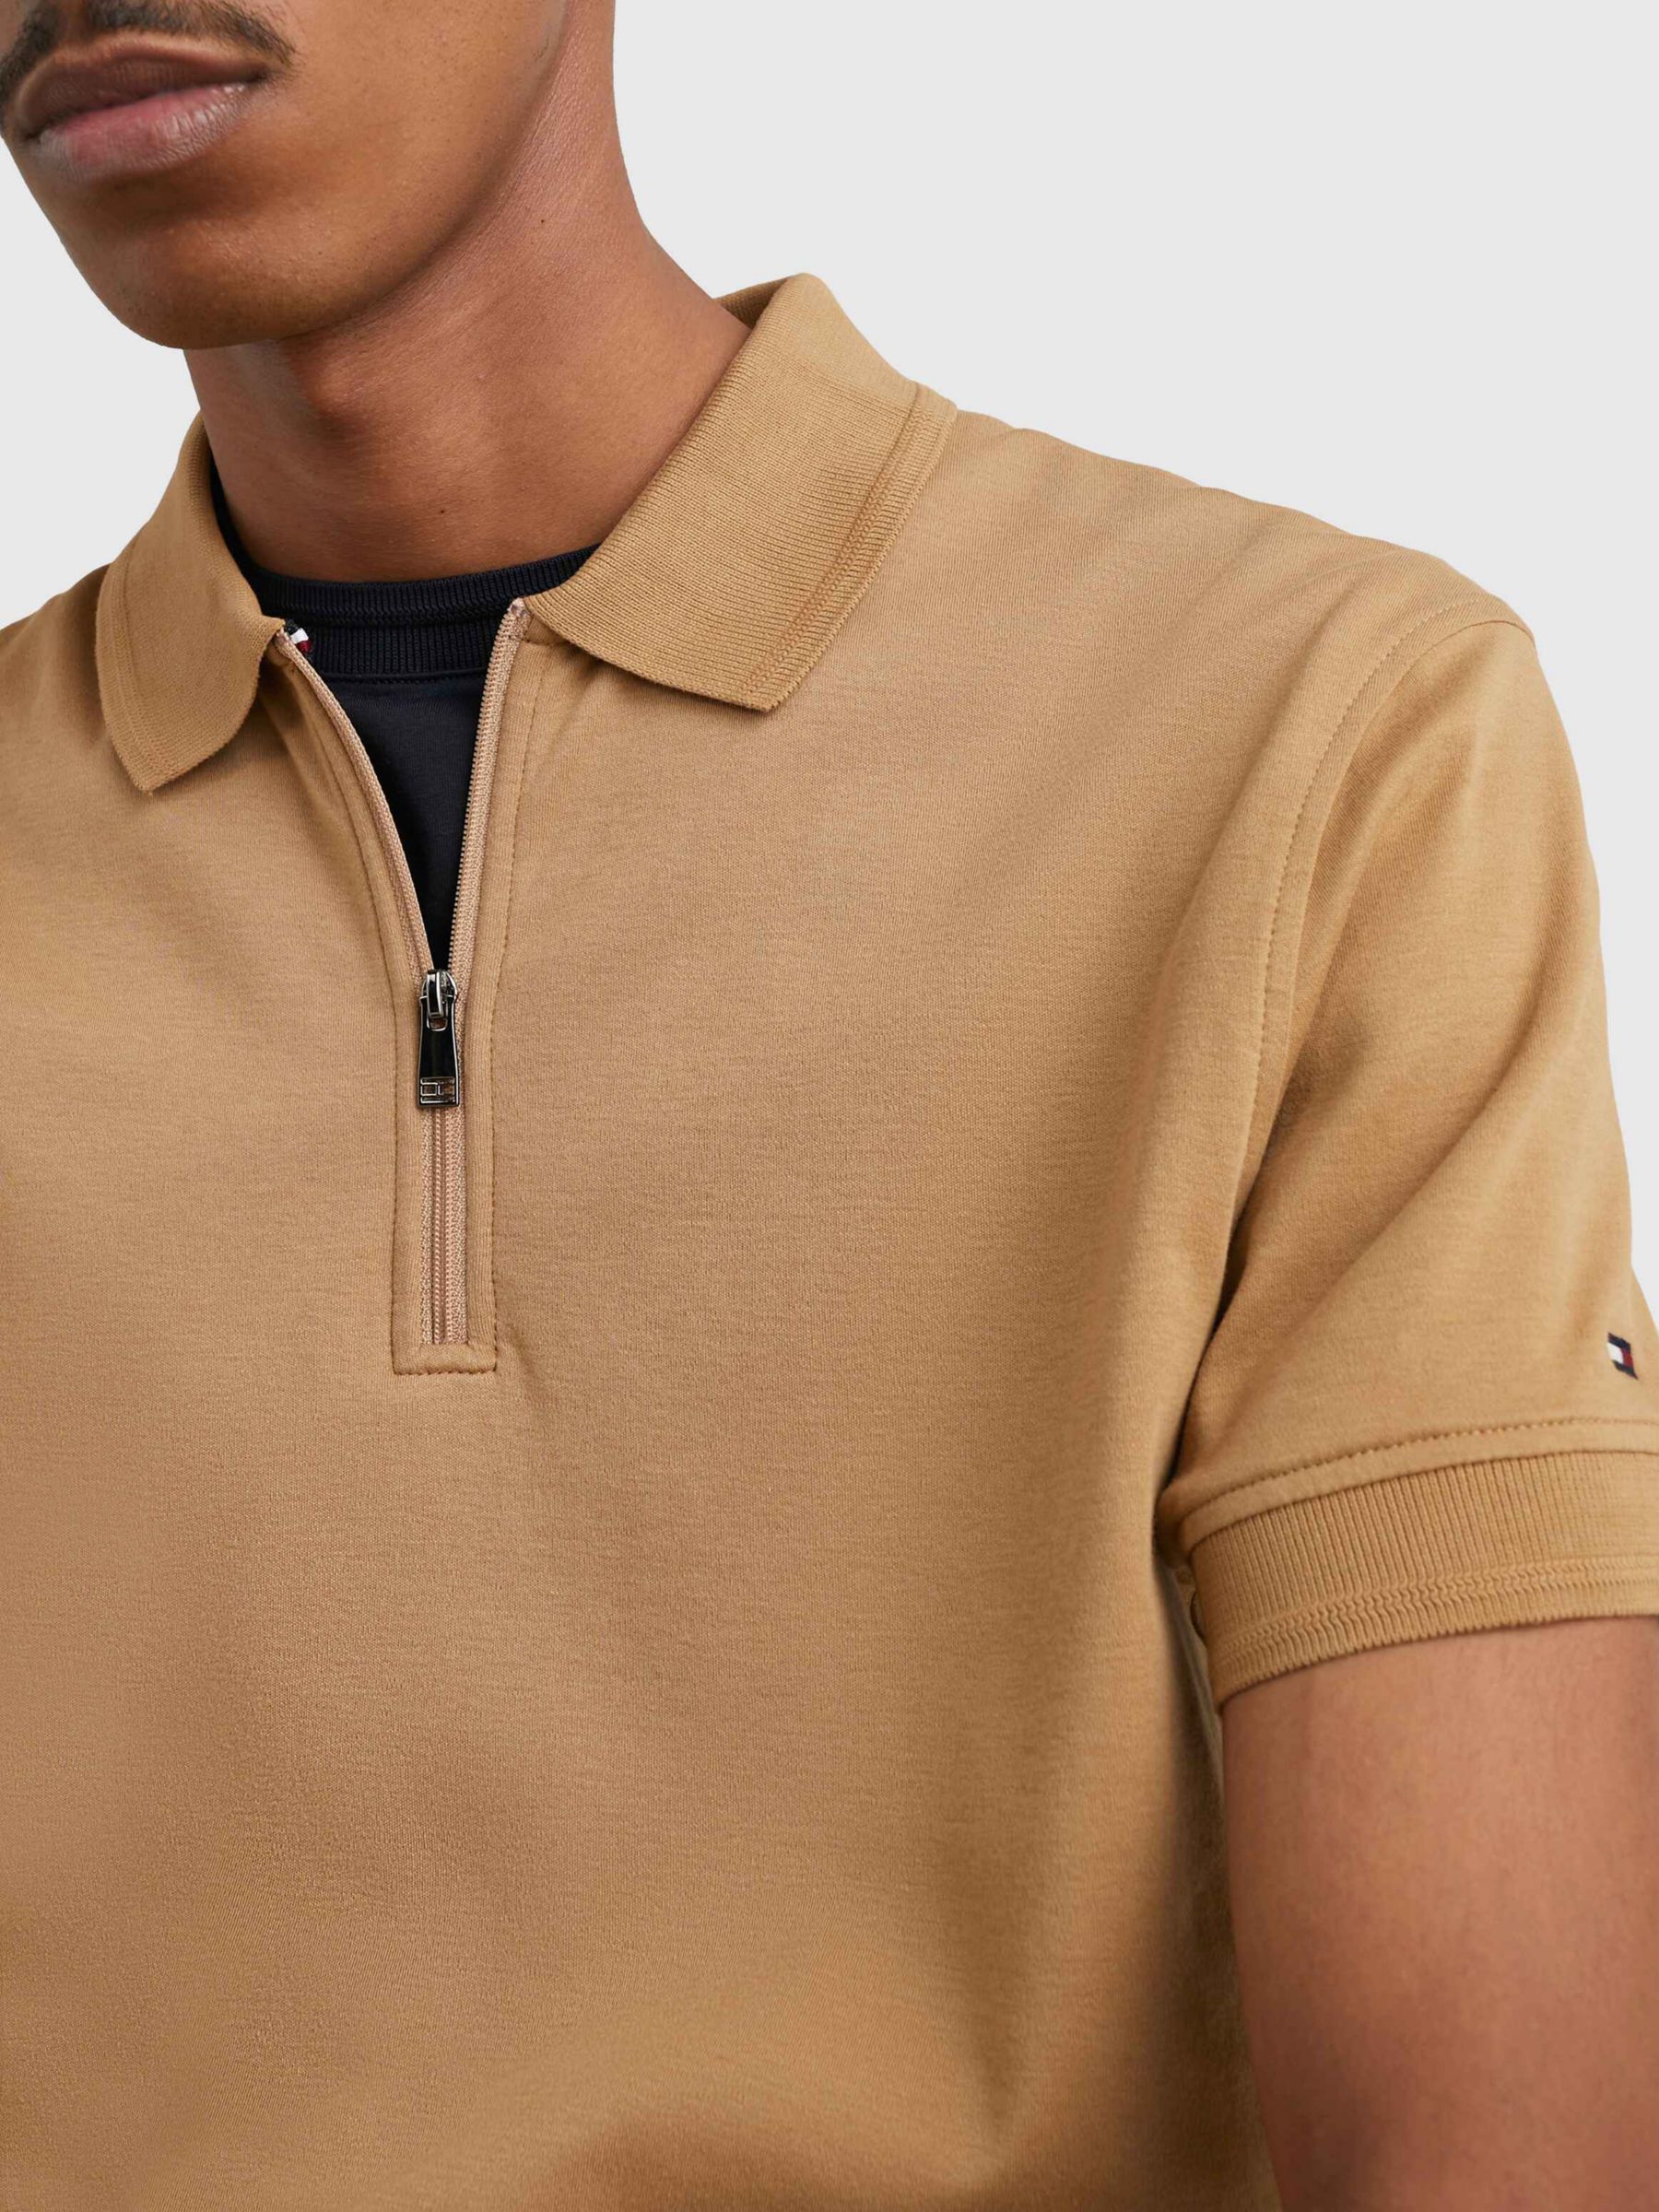 Buy Tommy Hilfiger Zip Neck Slim Fit Polo Shirt Online at johnlewis.com